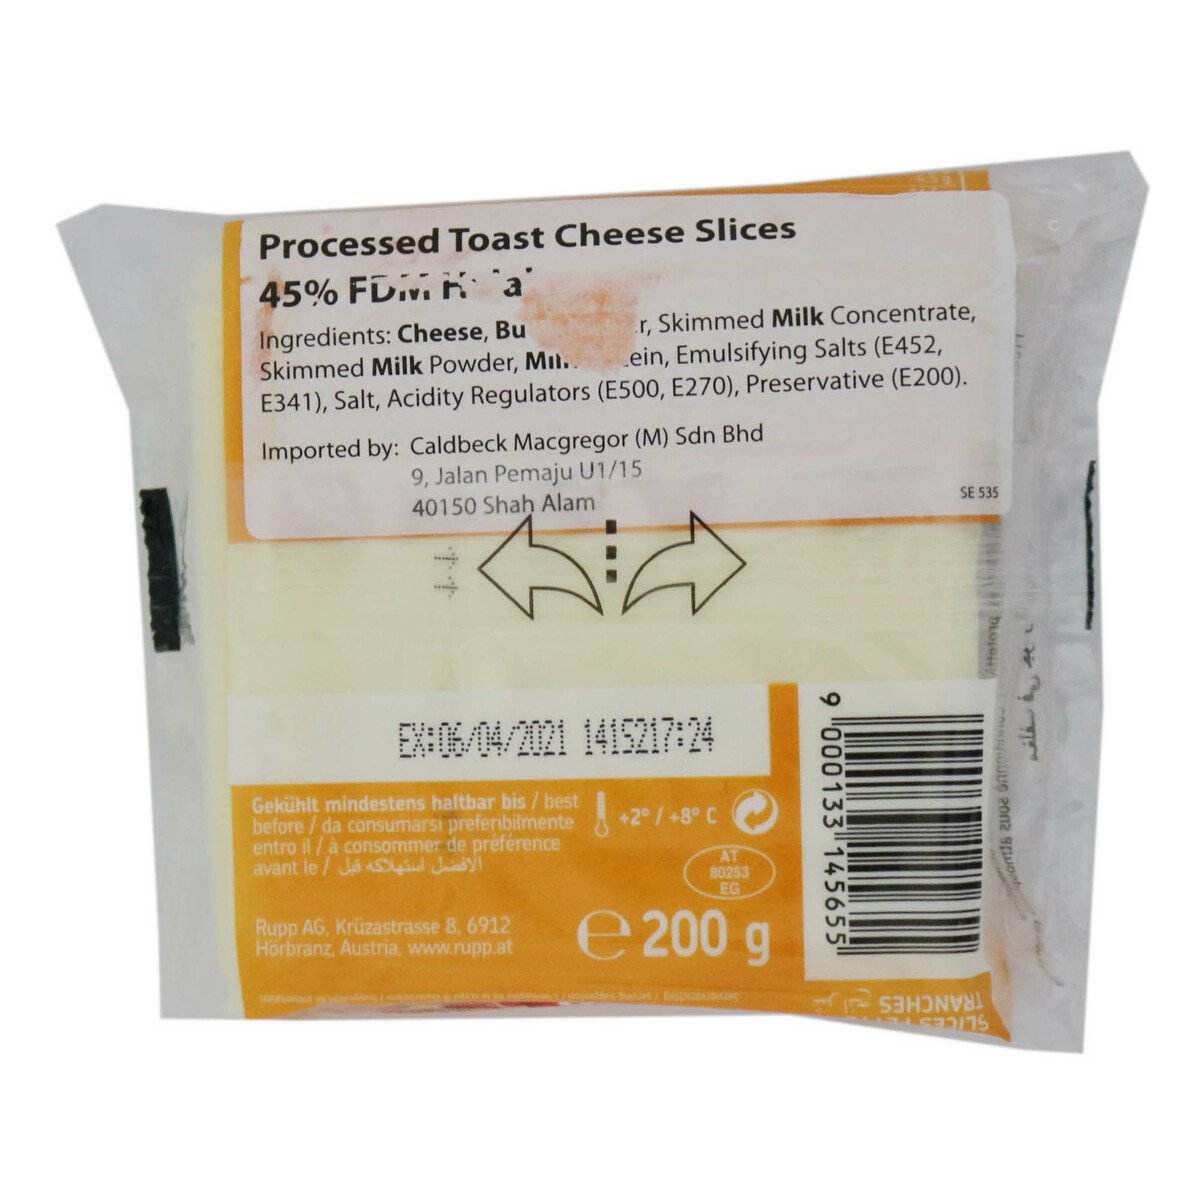 Rupp Toast Slice Cheese 200g